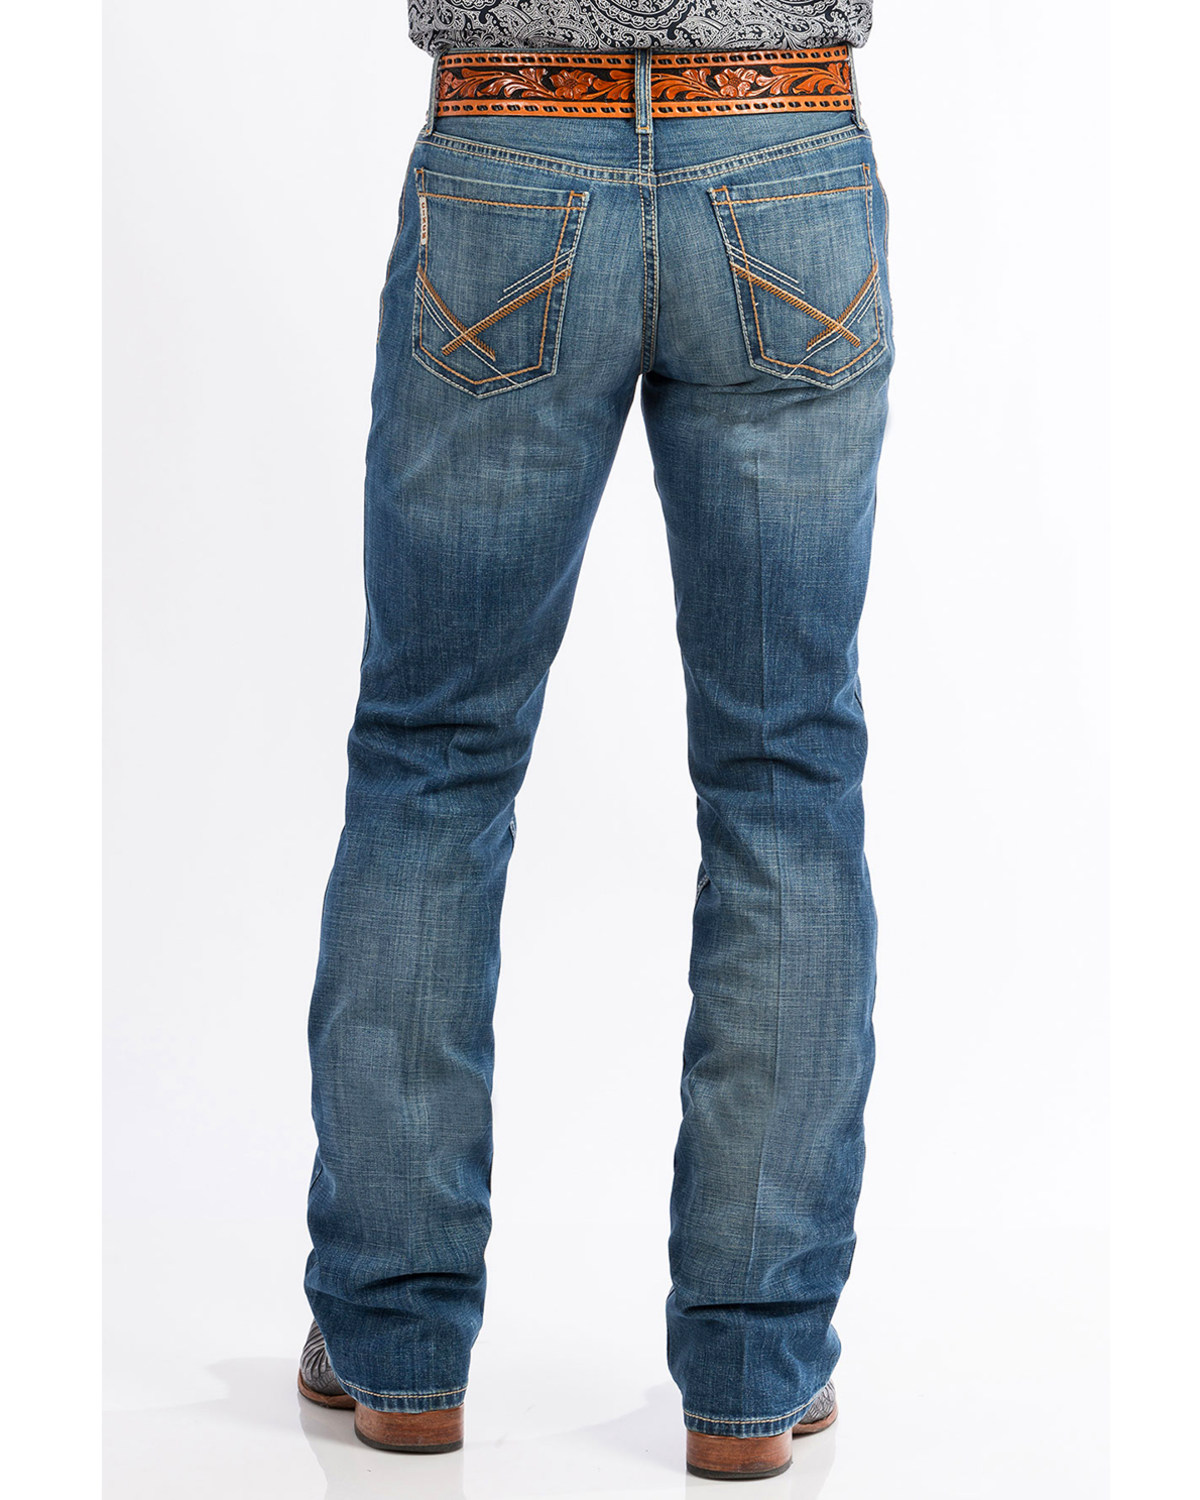 cinch jeans mens bootcut